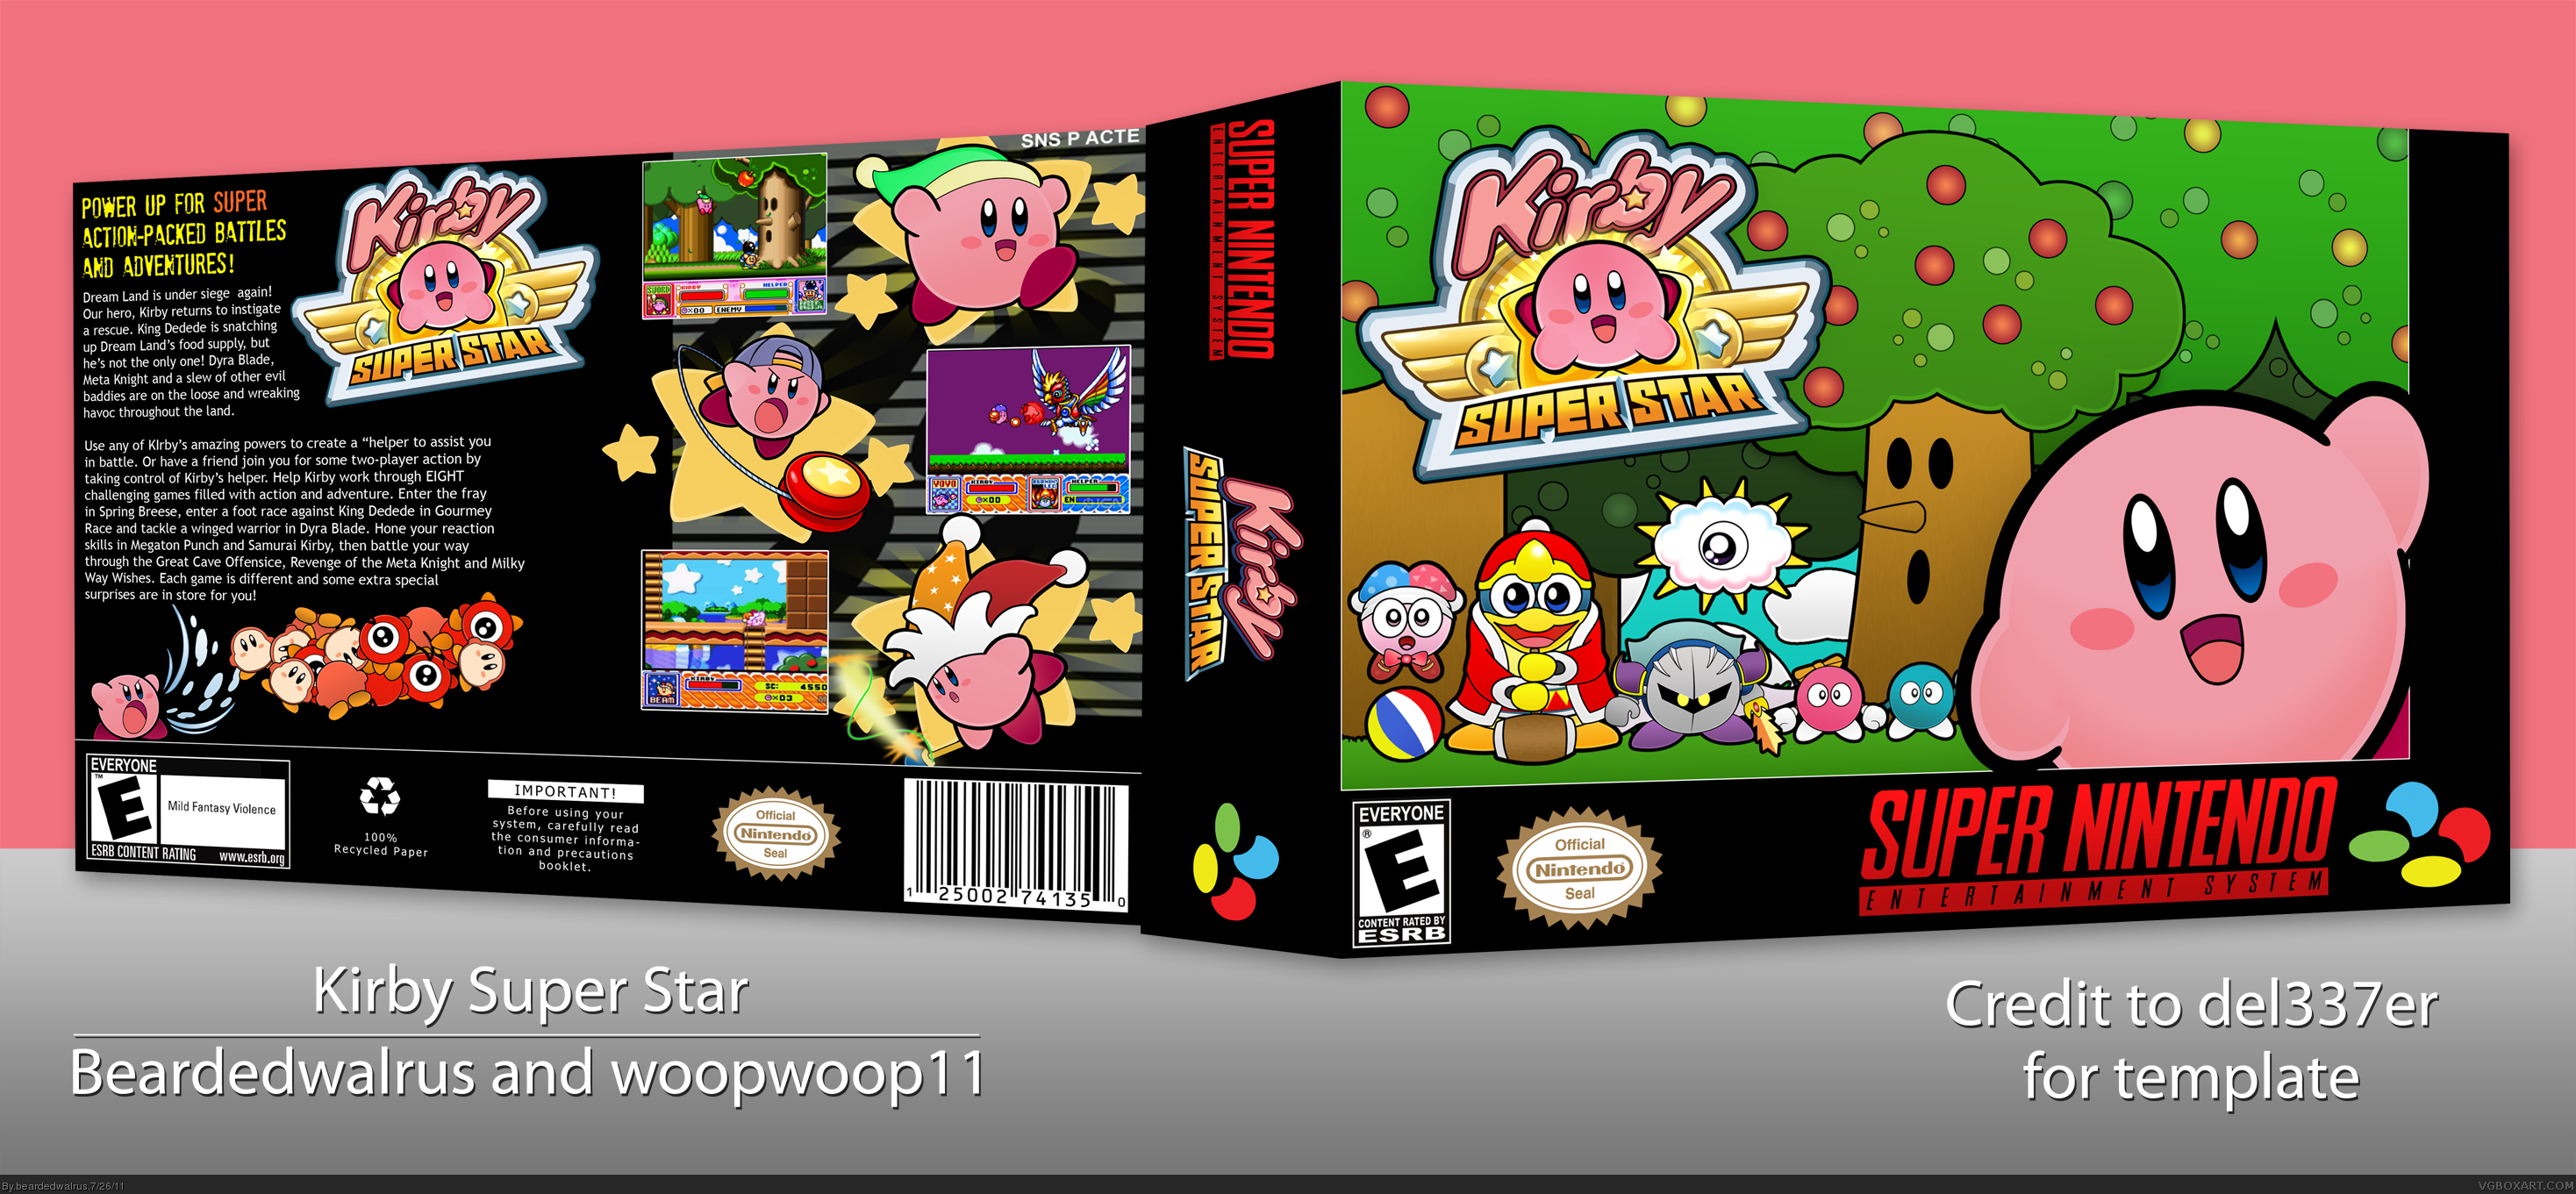 Kirby Super Star SNES Box Art Cover by beardedwalrus